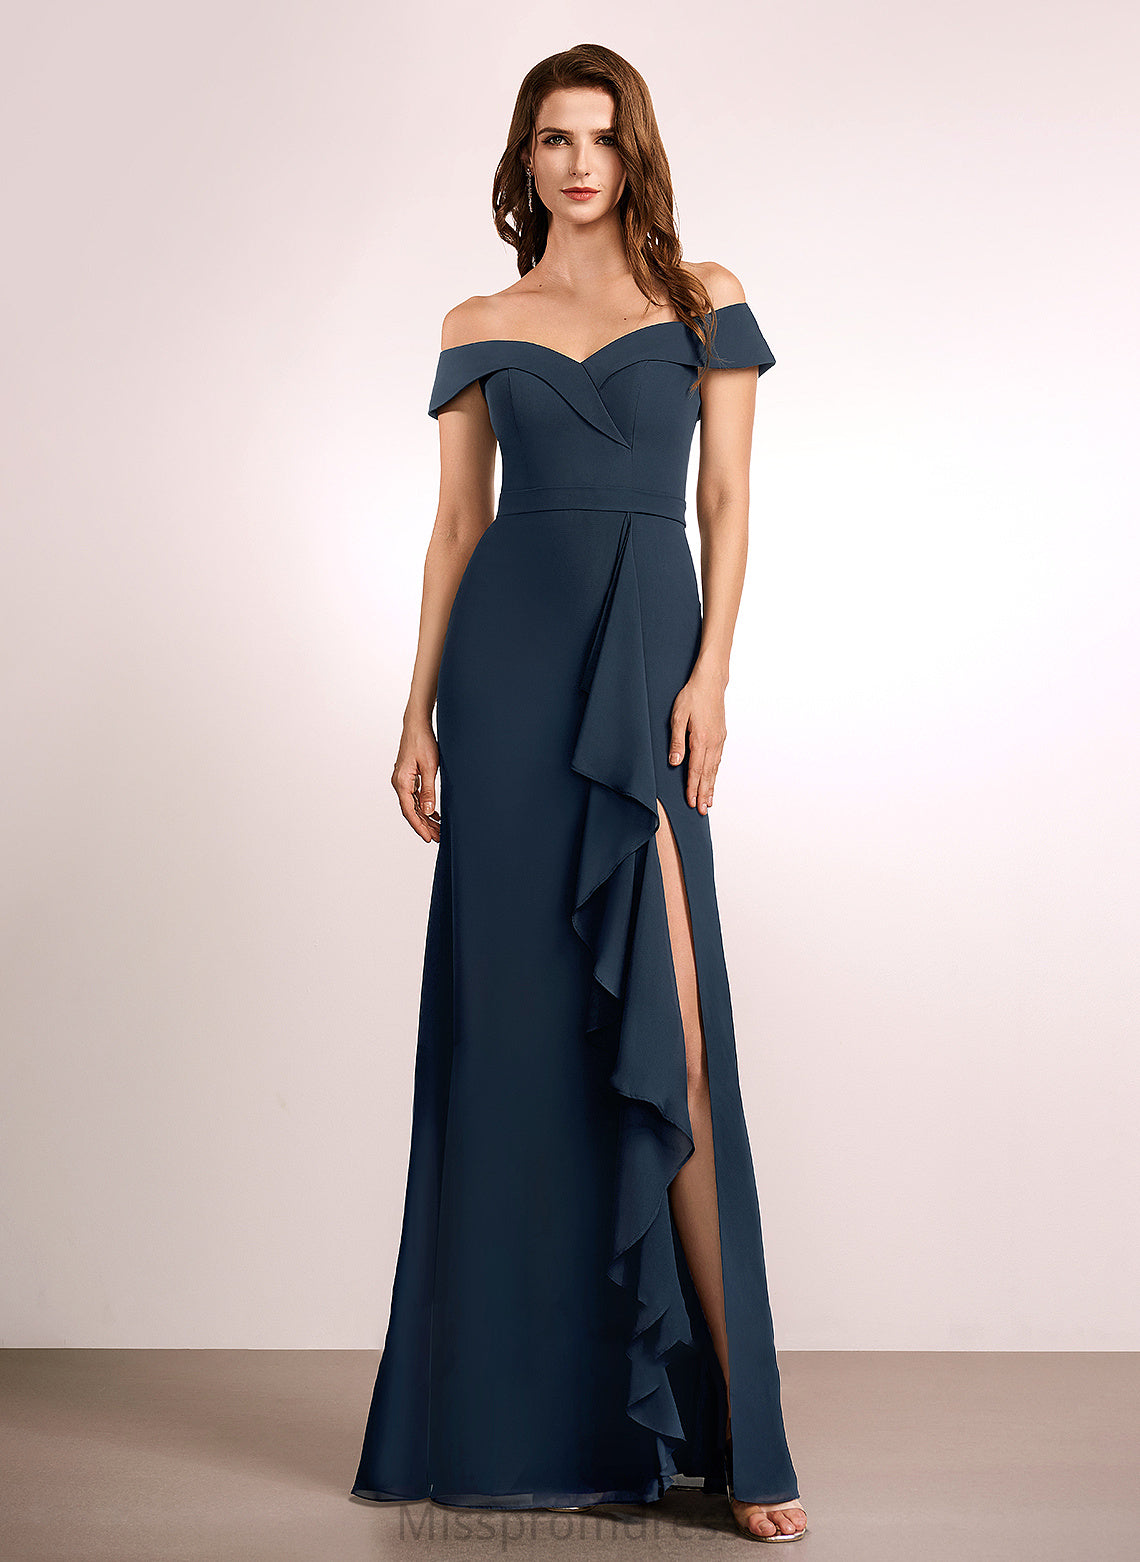 A-Line Neckline Length Ruffle Fabric Off-the-Shoulder Embellishment Floor-Length Silhouette Gretchen Floor Length Spaghetti Staps Bridesmaid Dresses